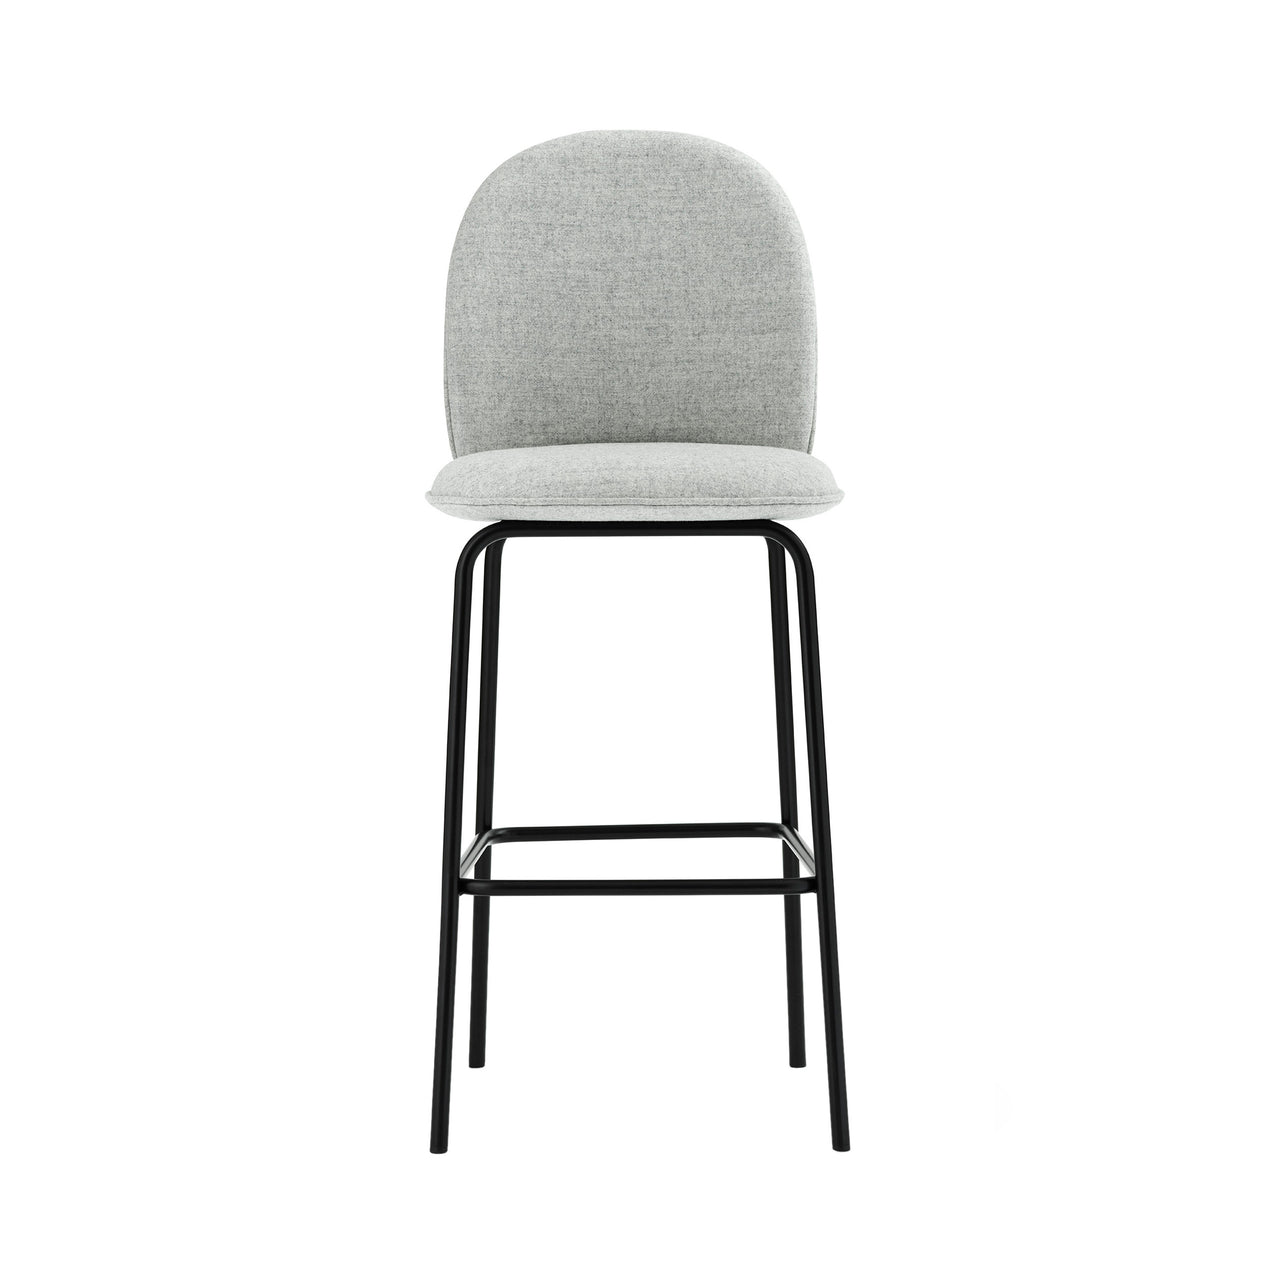 Ace Bar + Counter Chair: Bar